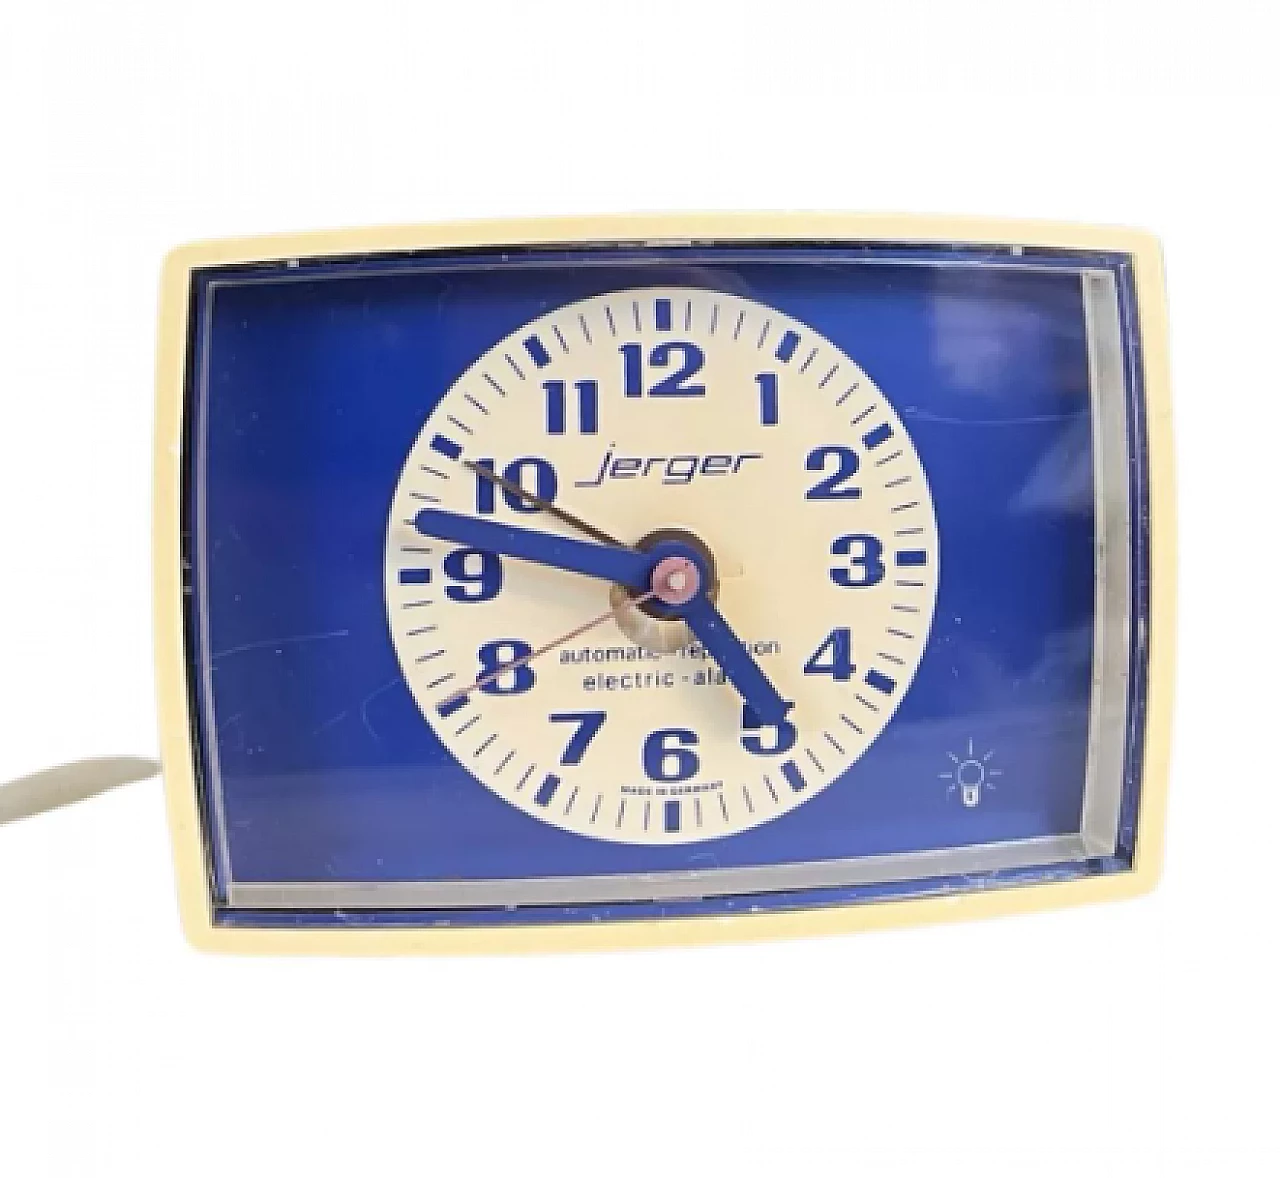 Beige and blue plastic Jerger alarm clock, 1970s 2